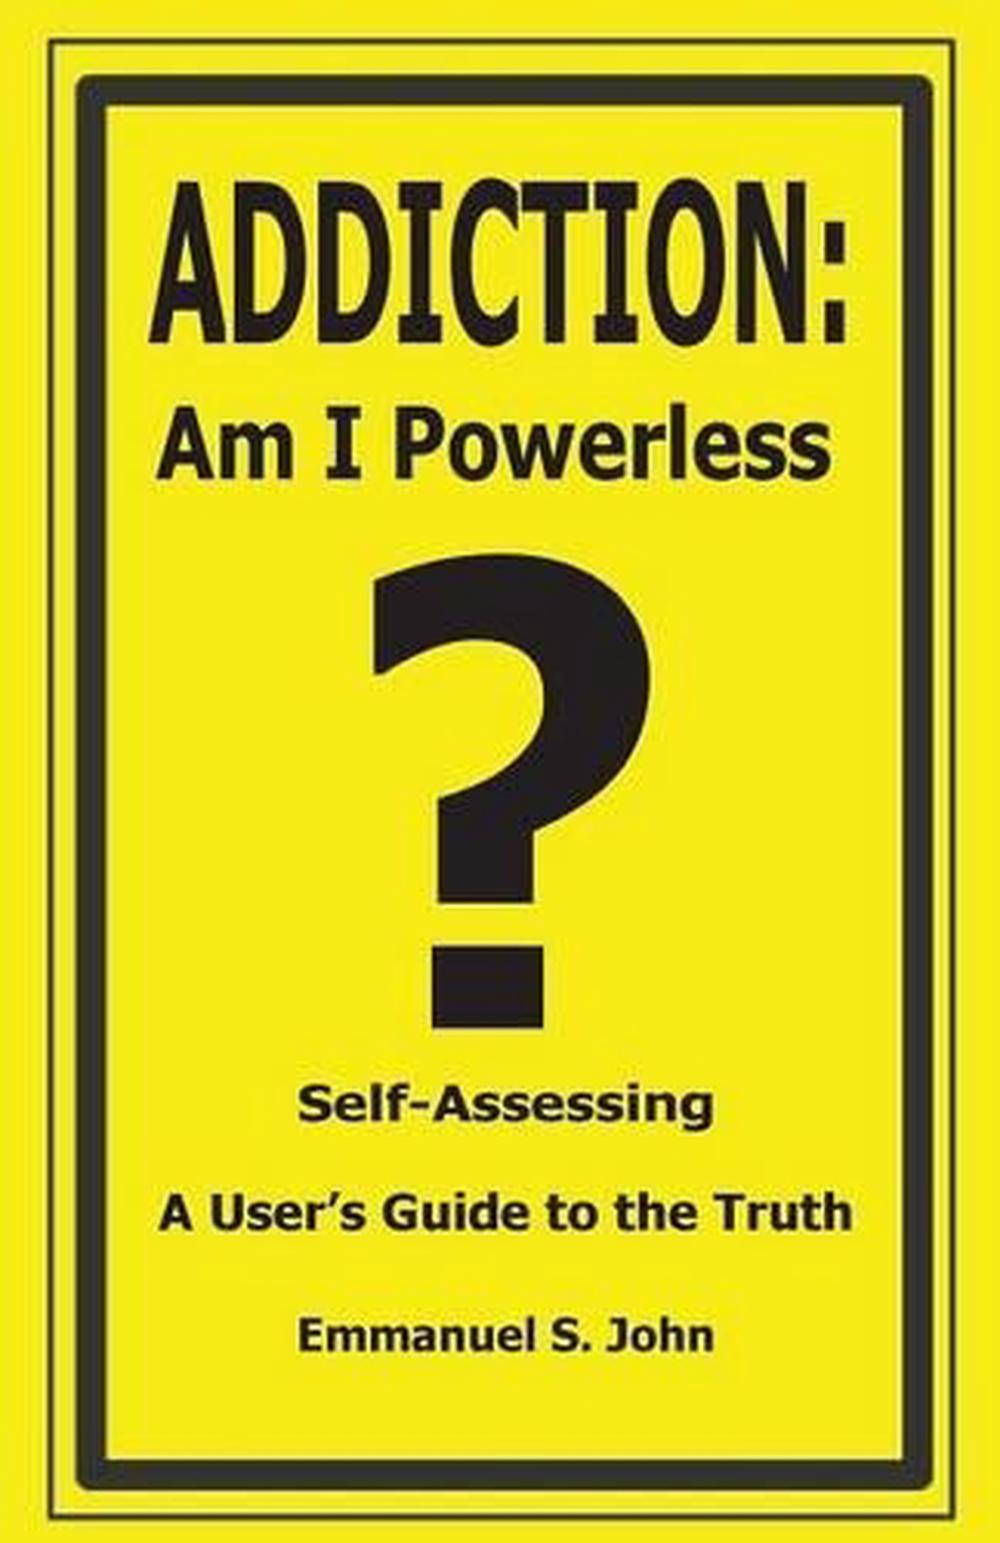 powerless over my addiction